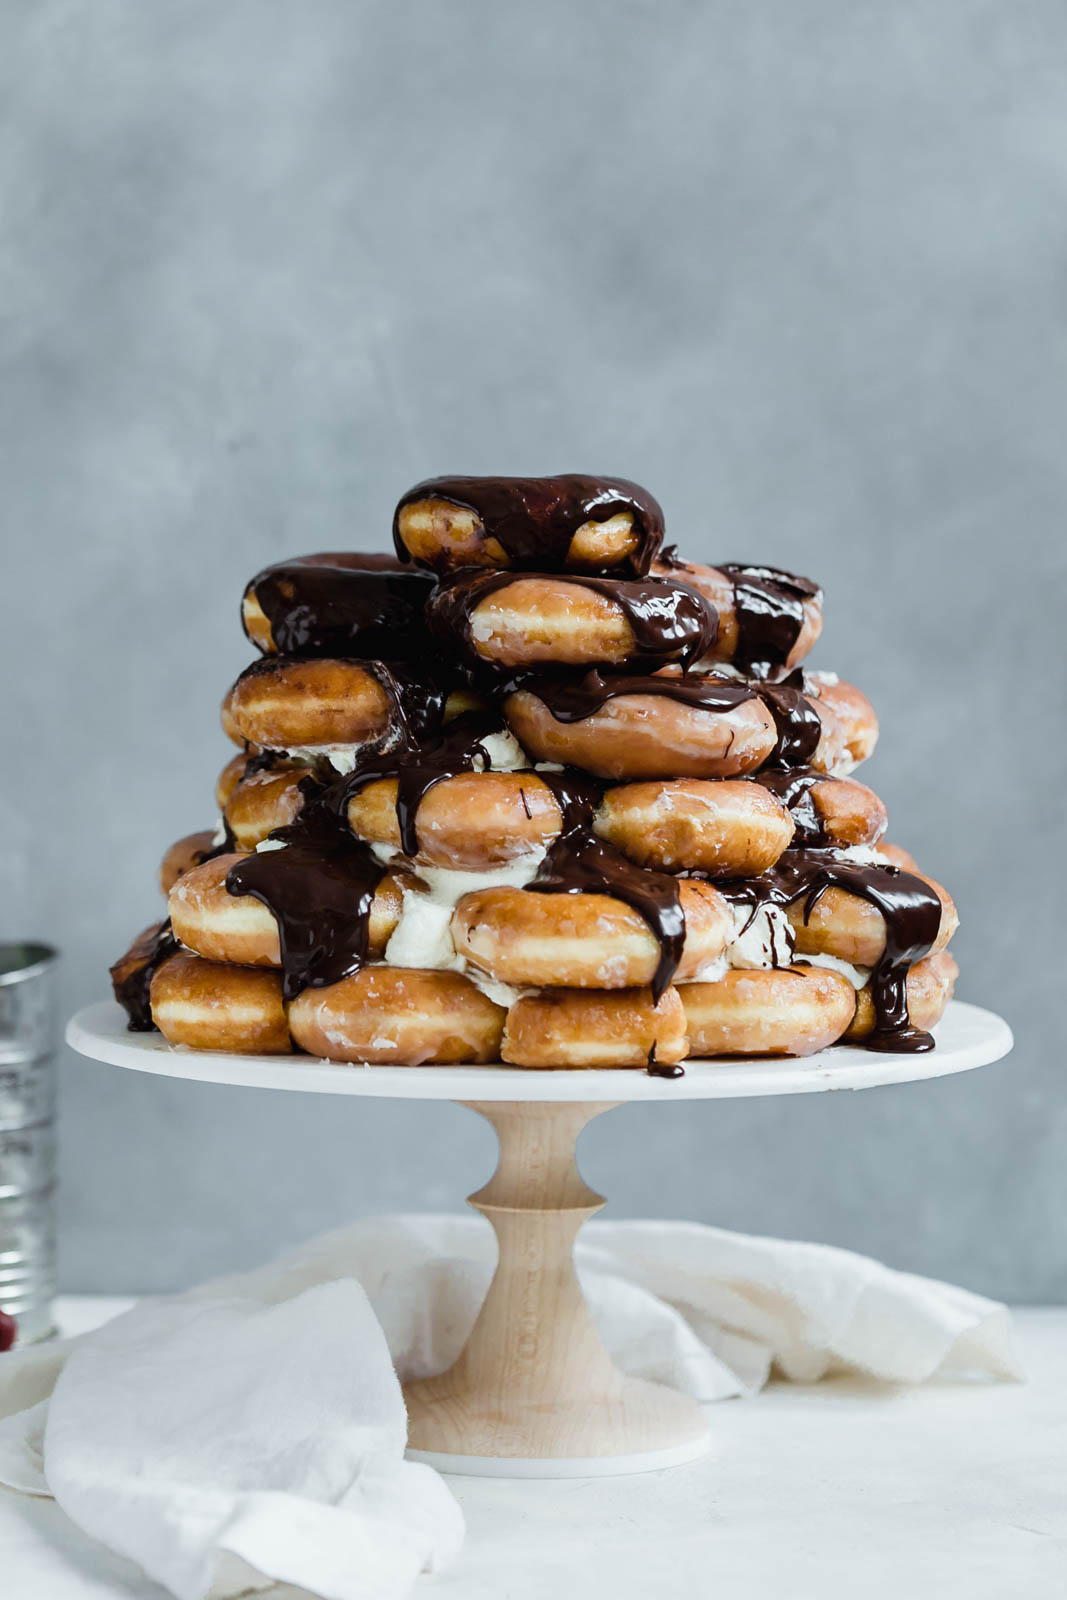 Krispy Kreme Donut Cake on the cake stand